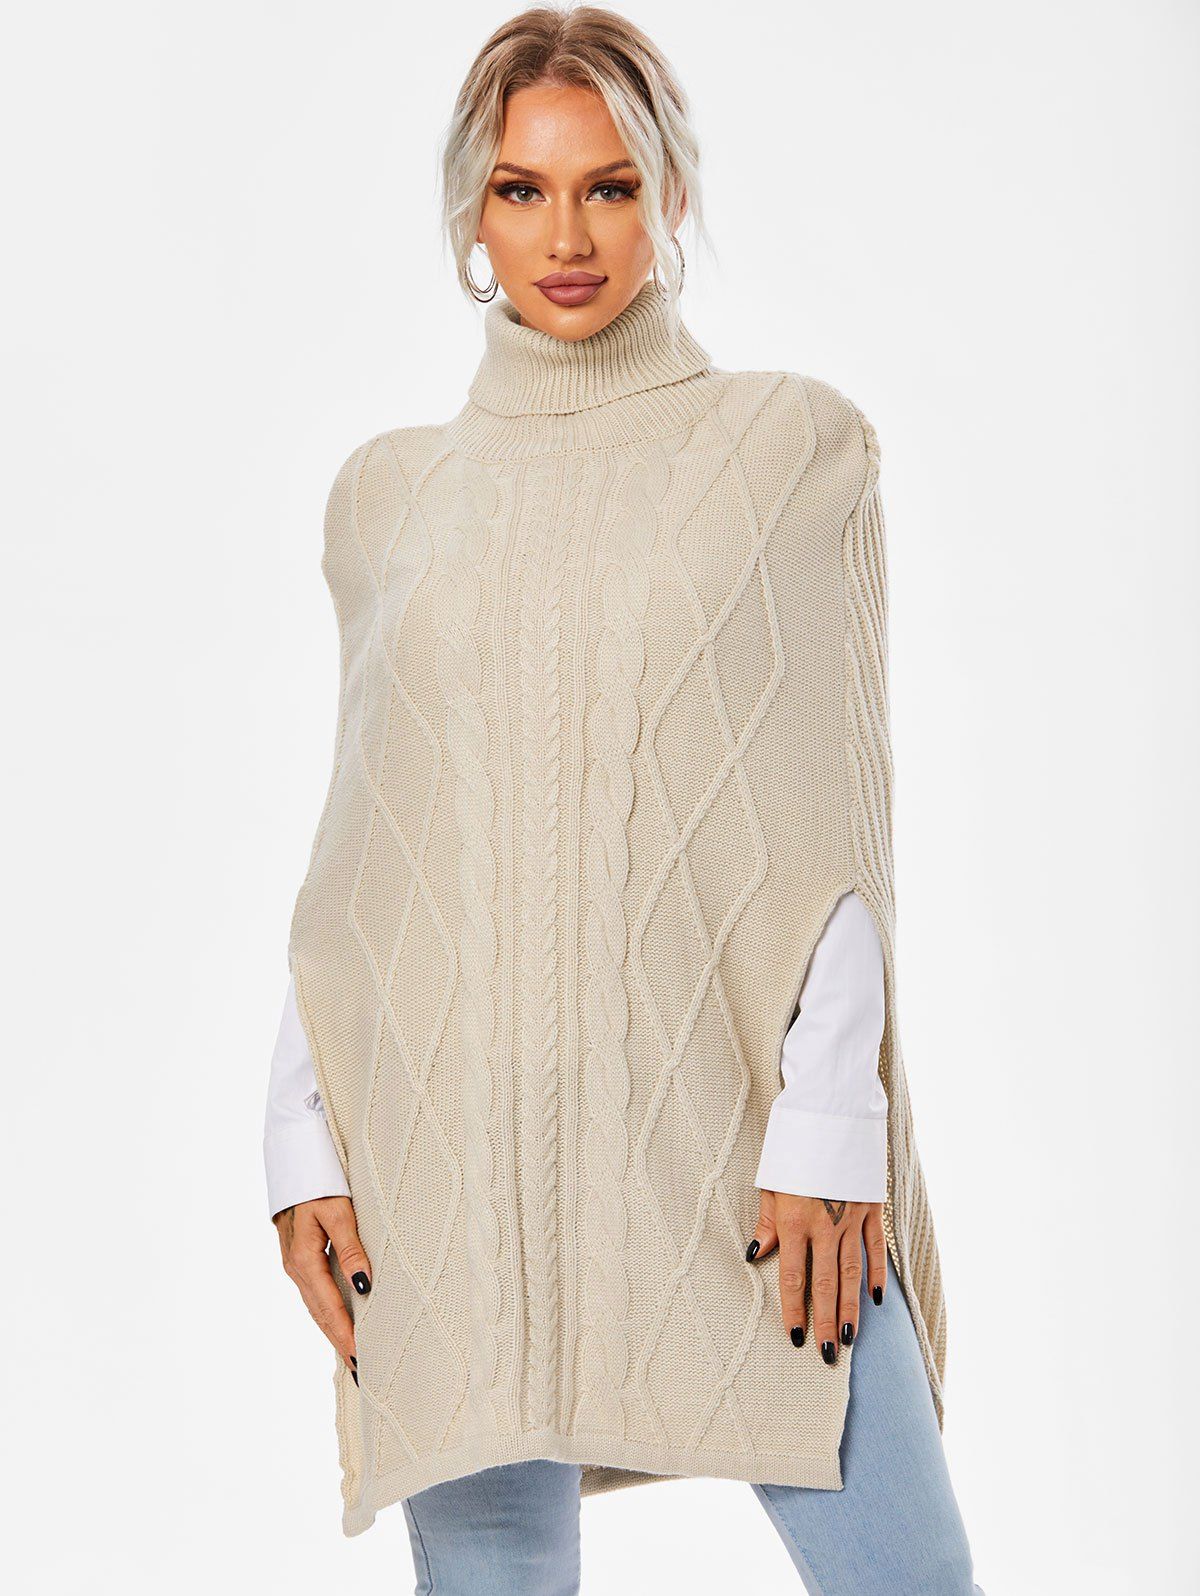 Turtleneck Side Slit Cape Sweater - WARM WHITE L